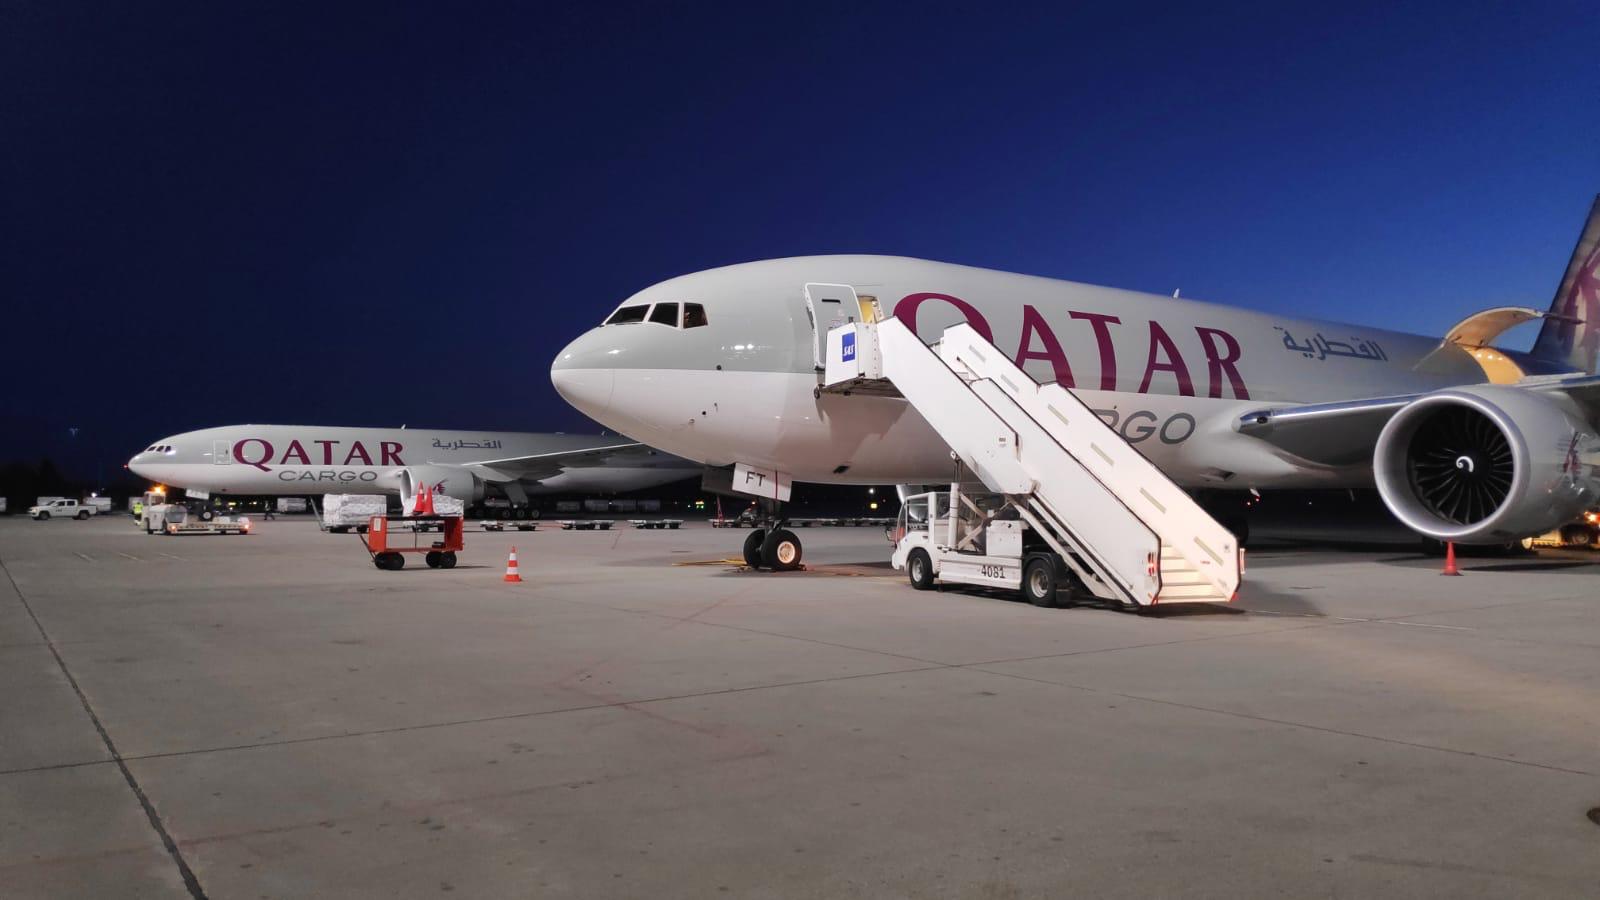 CHAMP’s Traxon cargoHUB welcomes Qatar Airways Cargo